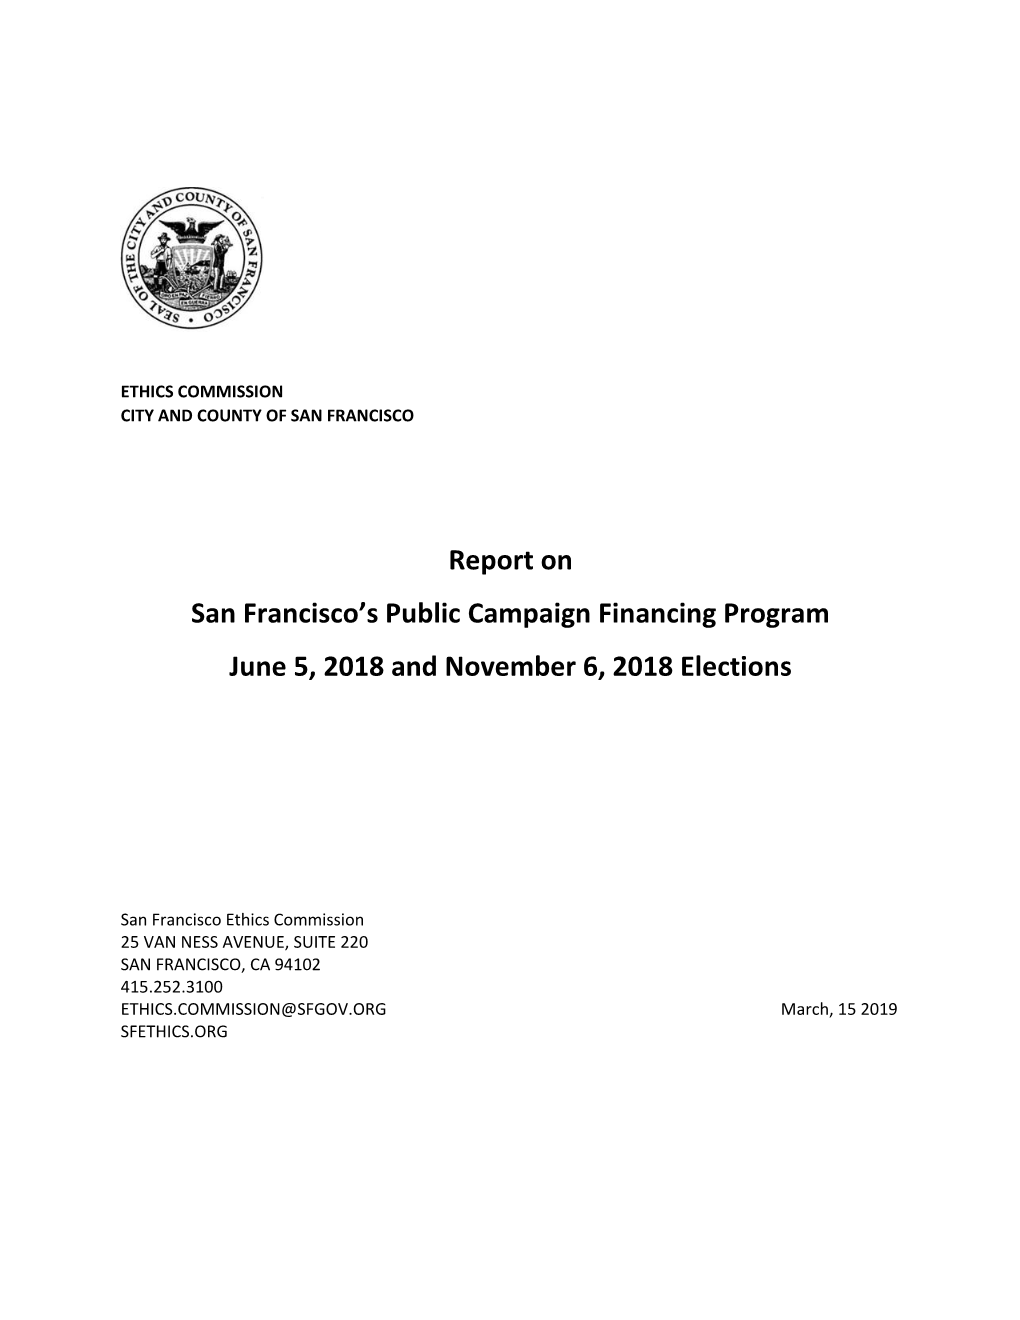 Report on San Francisco's Public Campaign Financing Program June